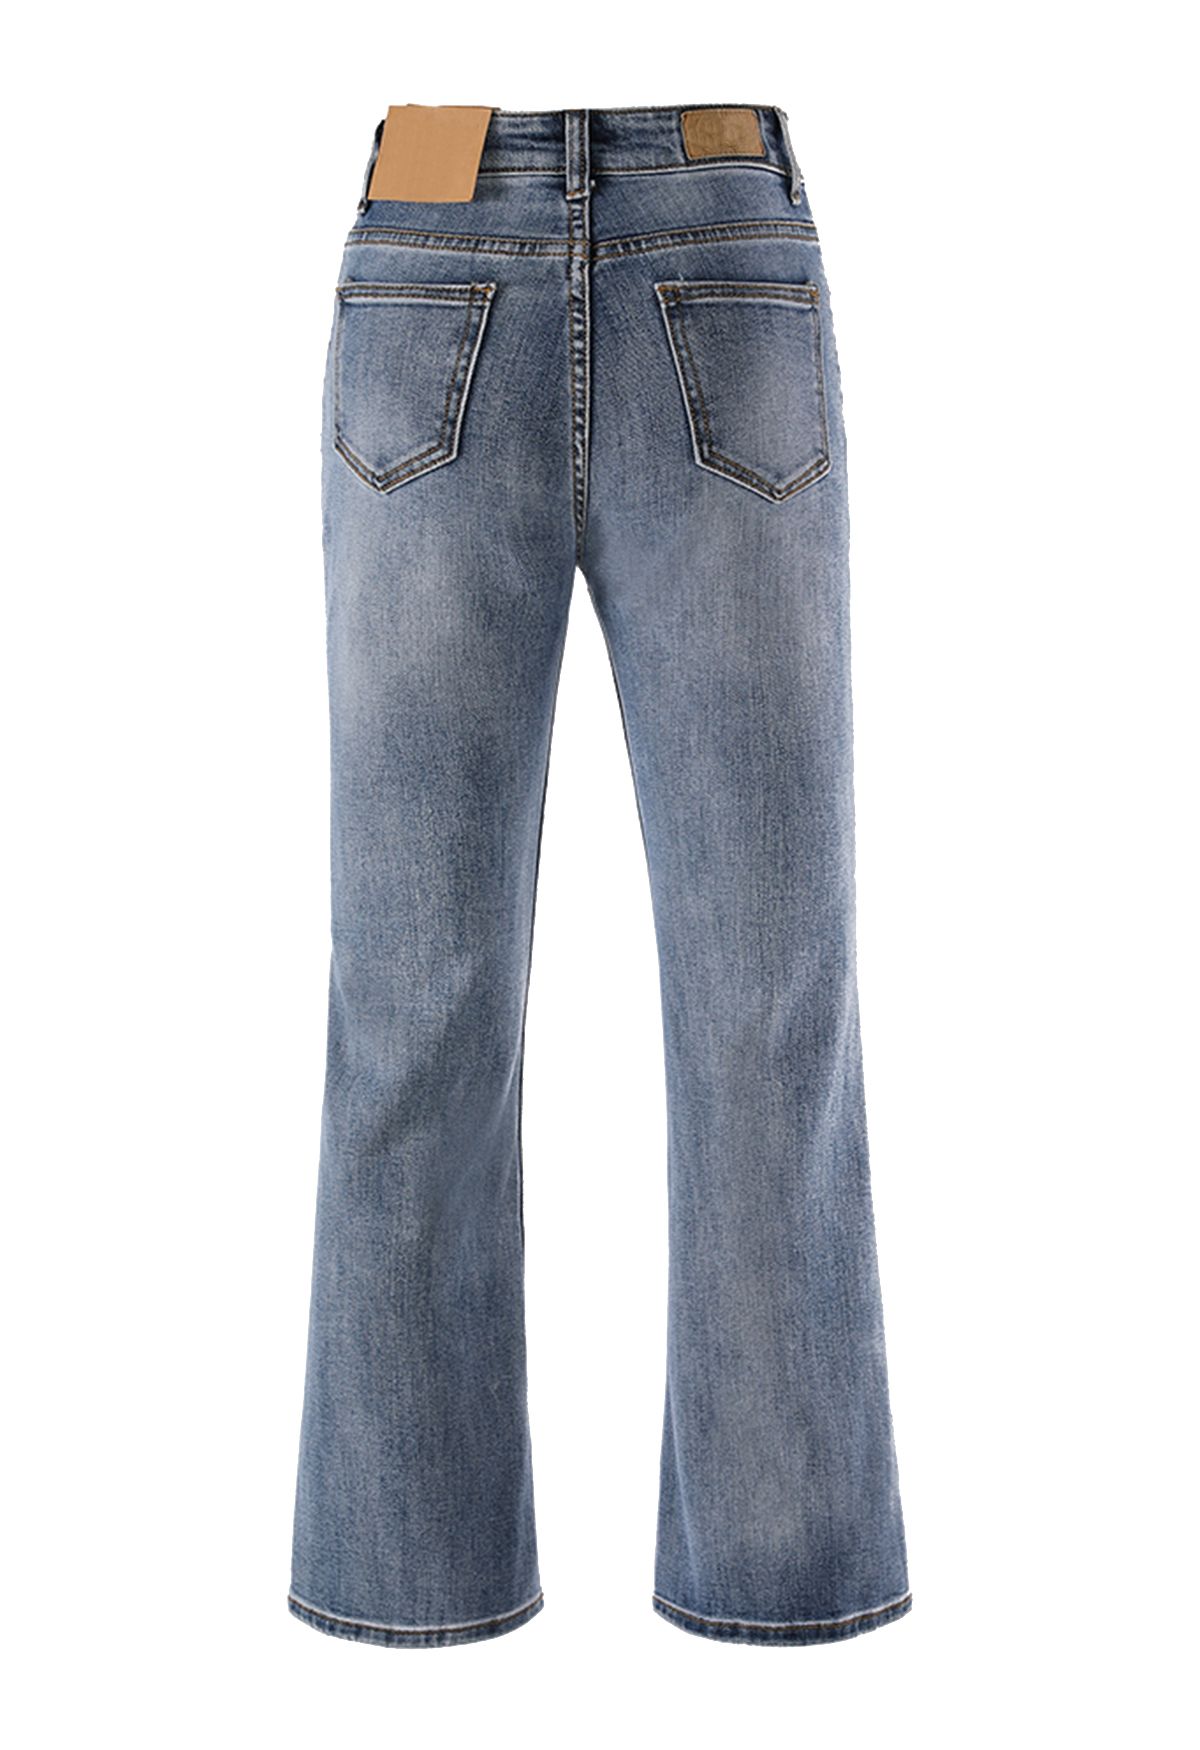 Jeans Flare Vintage Azul Rasgado